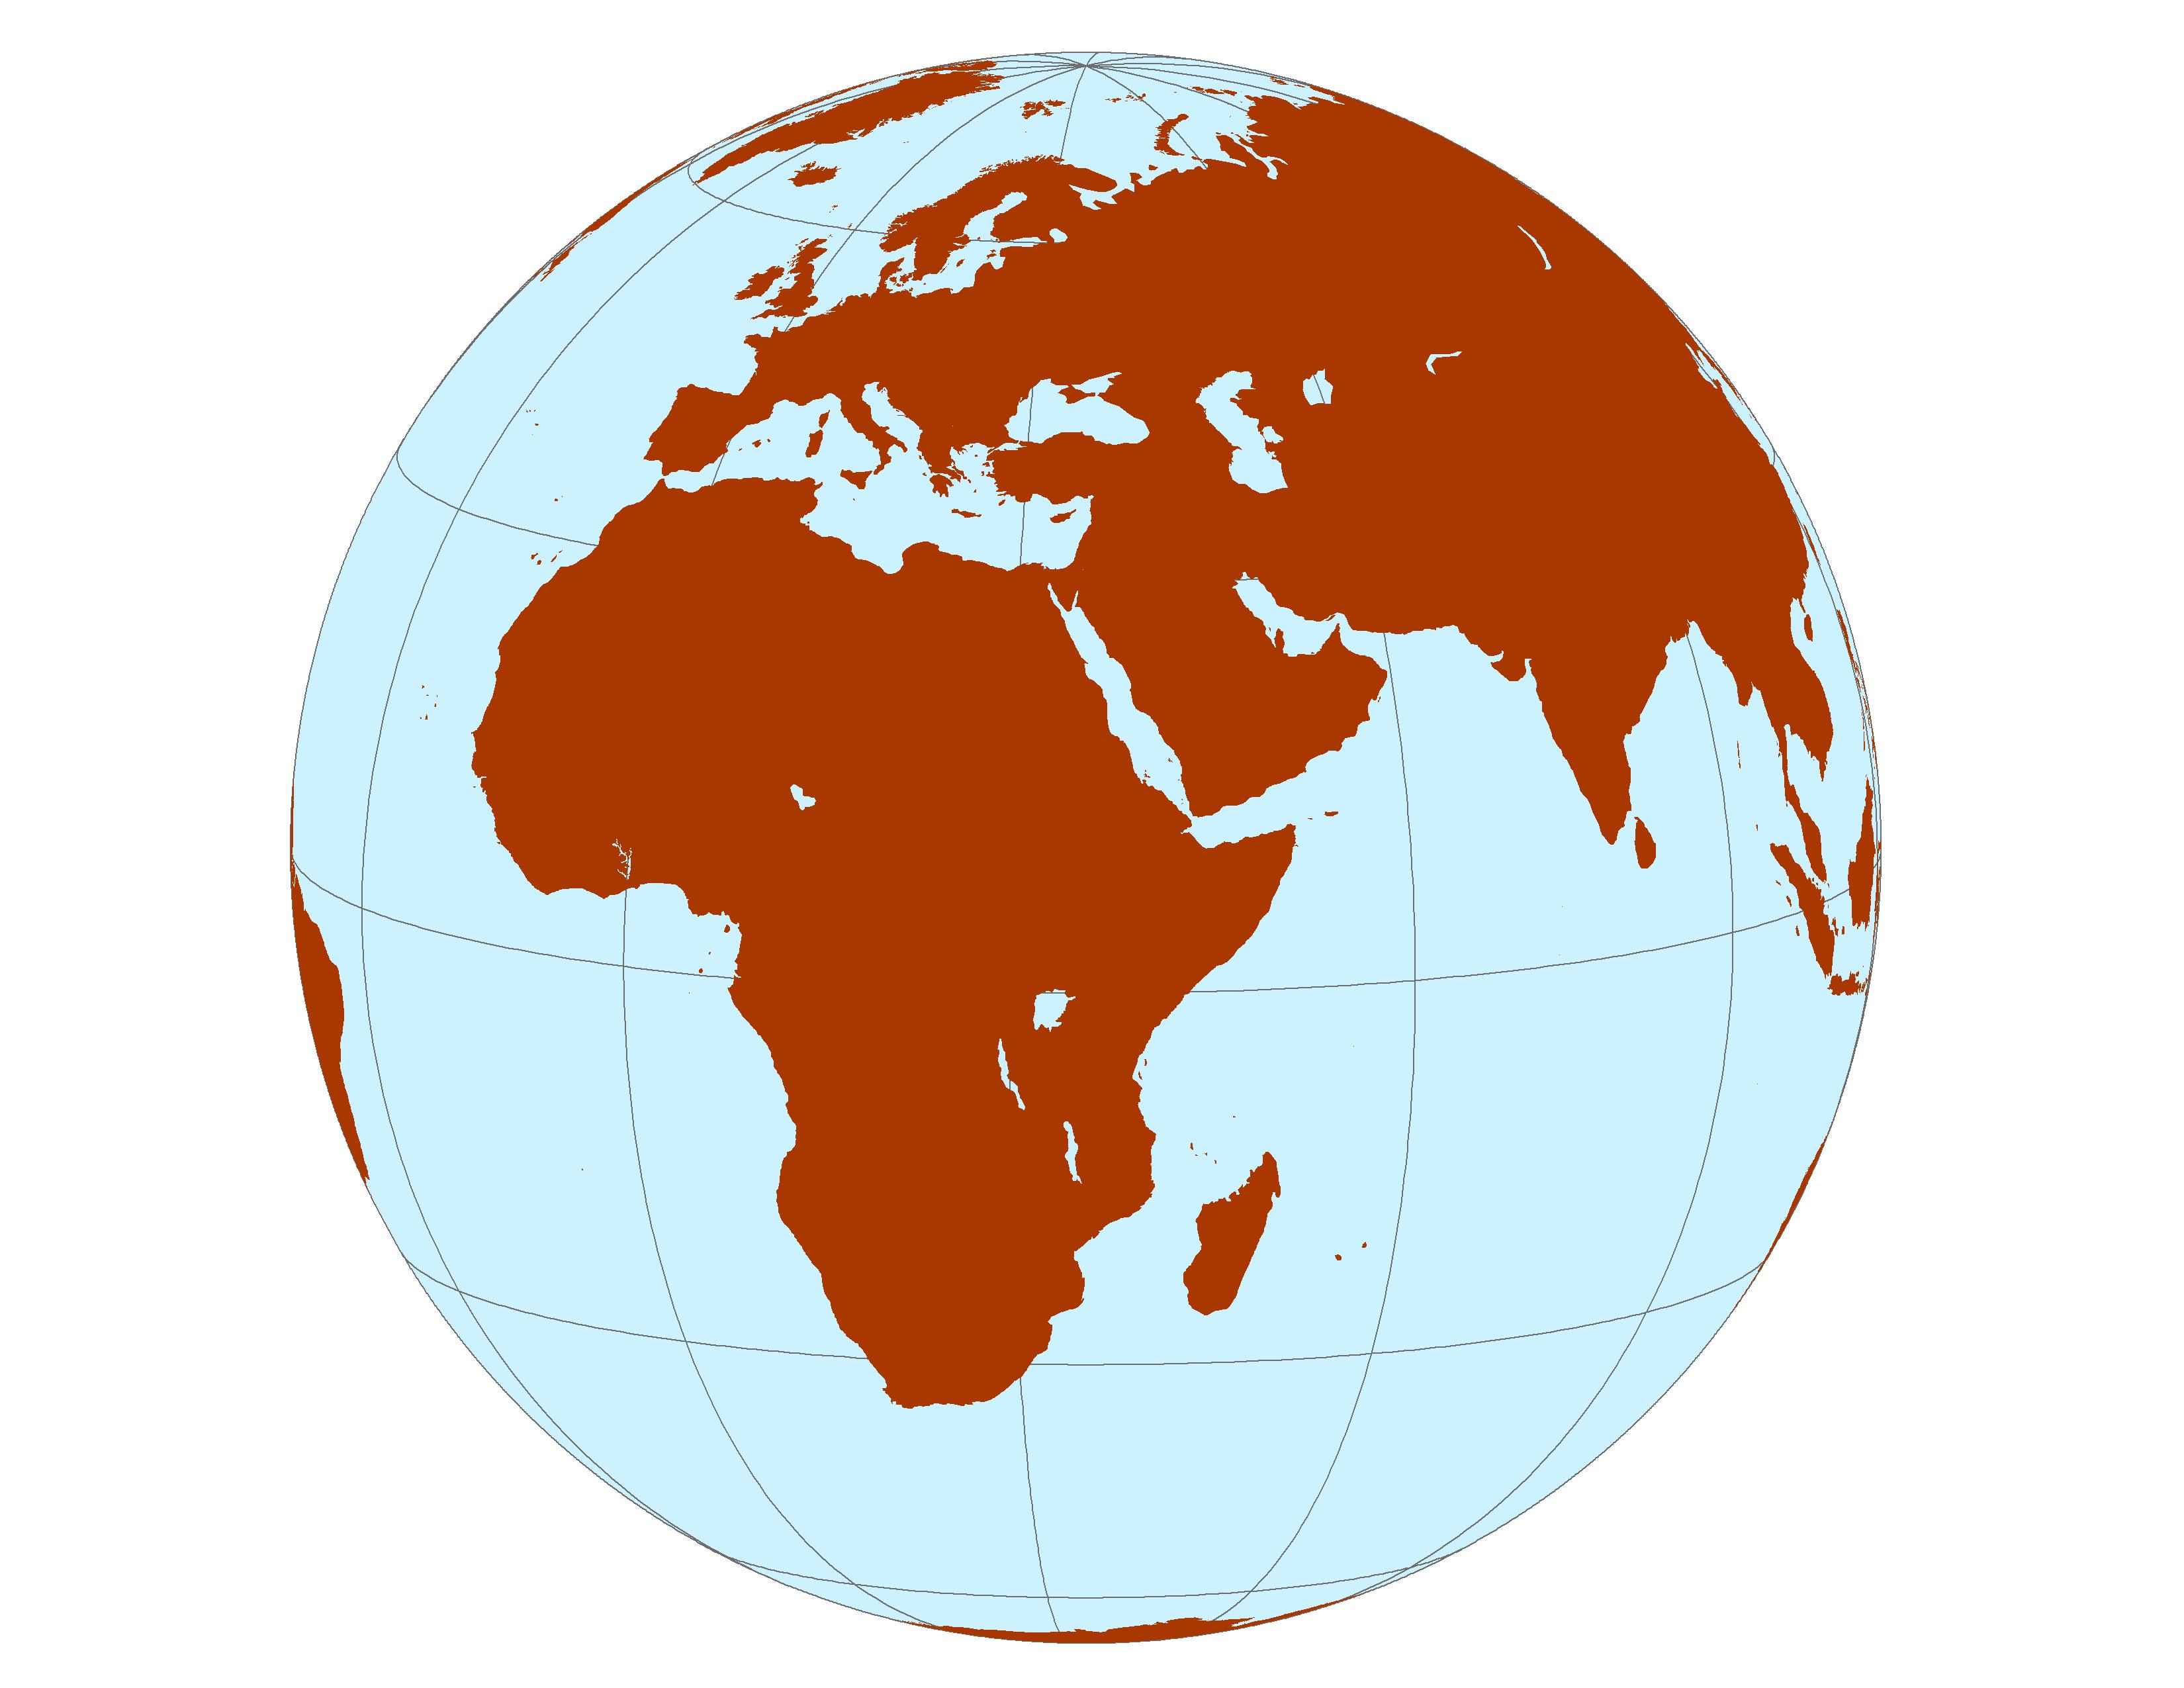 View of the Eastern Hemisphere on a Globe